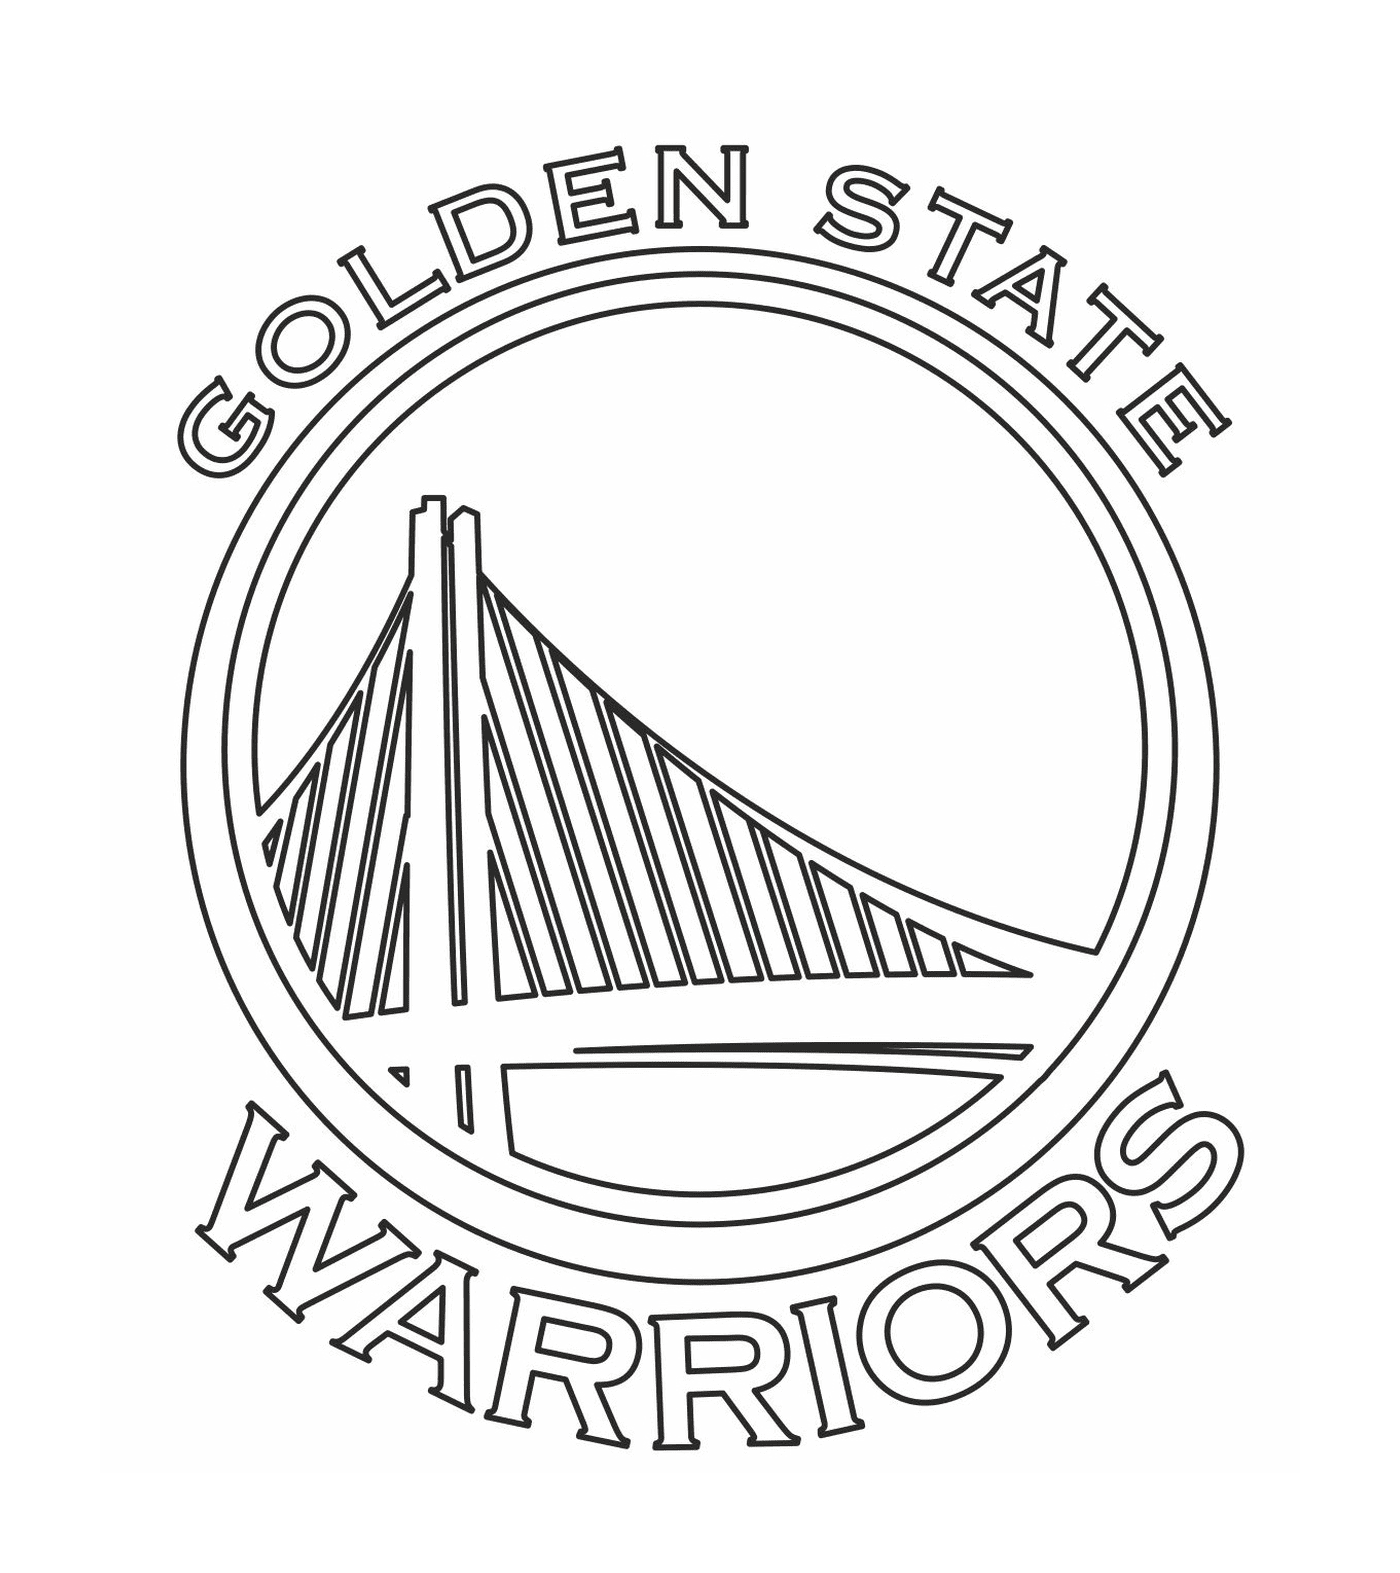  Das Logo der NBA Golden State Warriors 